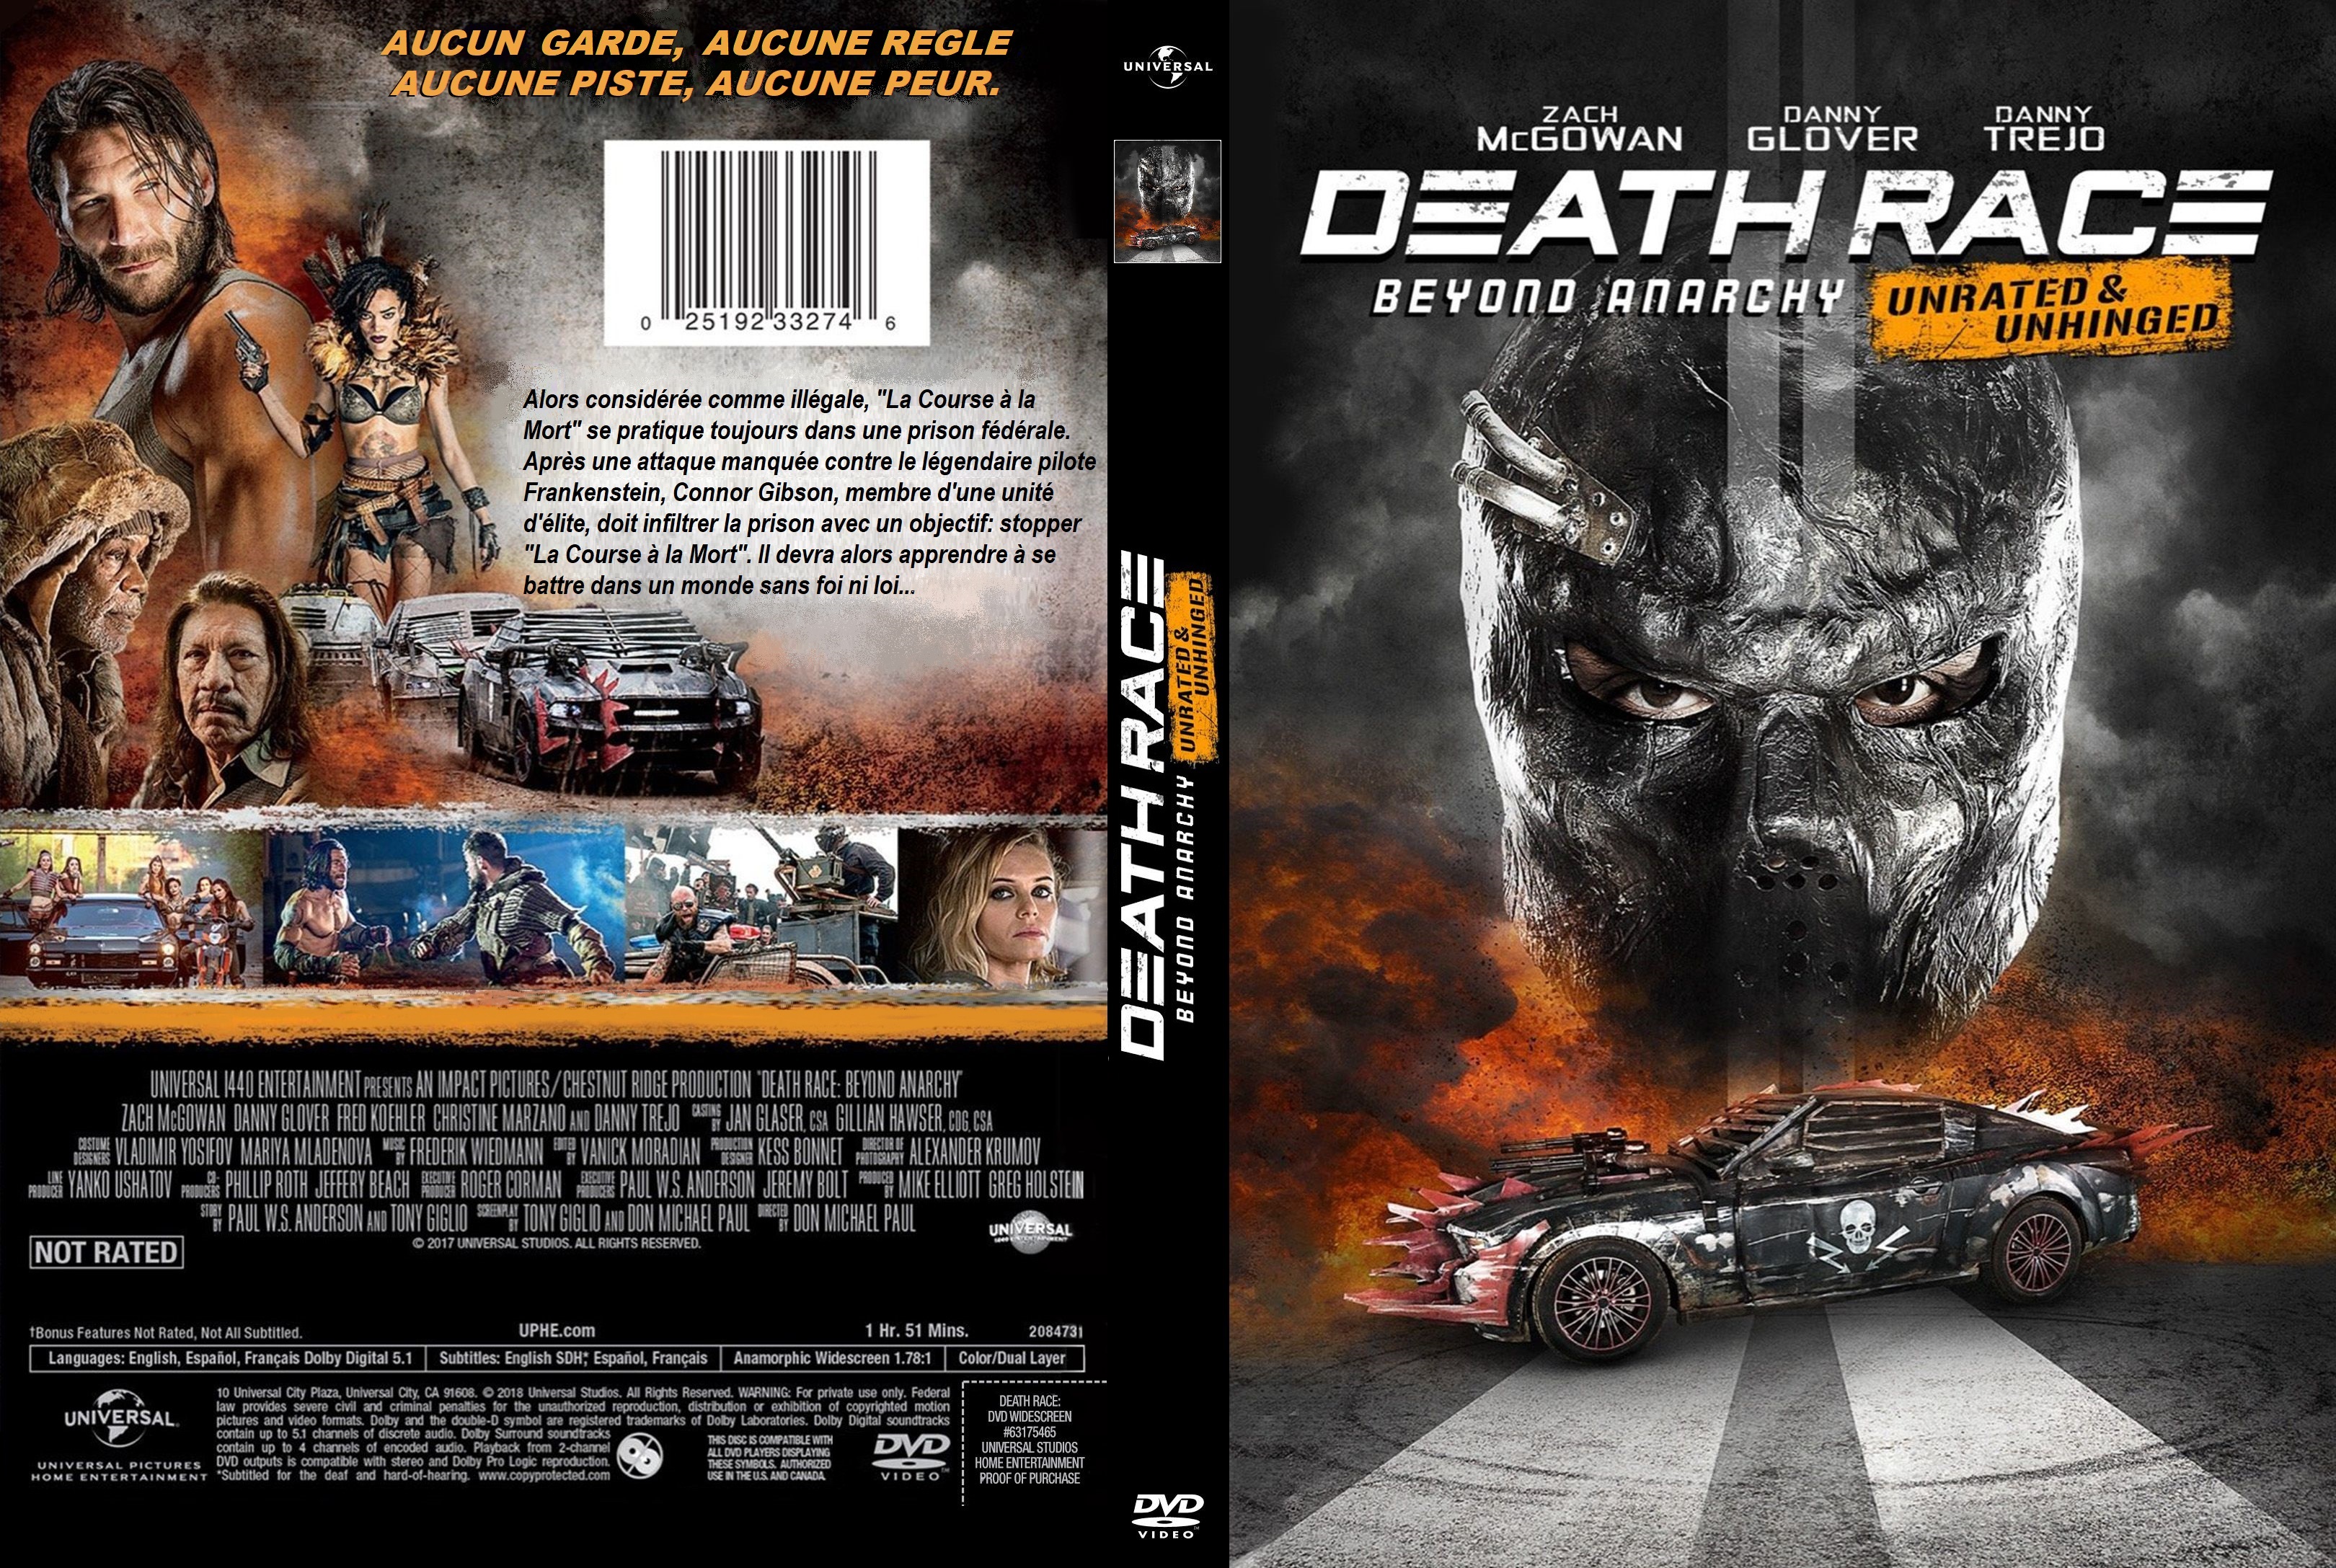 Jaquette DVD Death Race 4 Beyond Anarchy custom